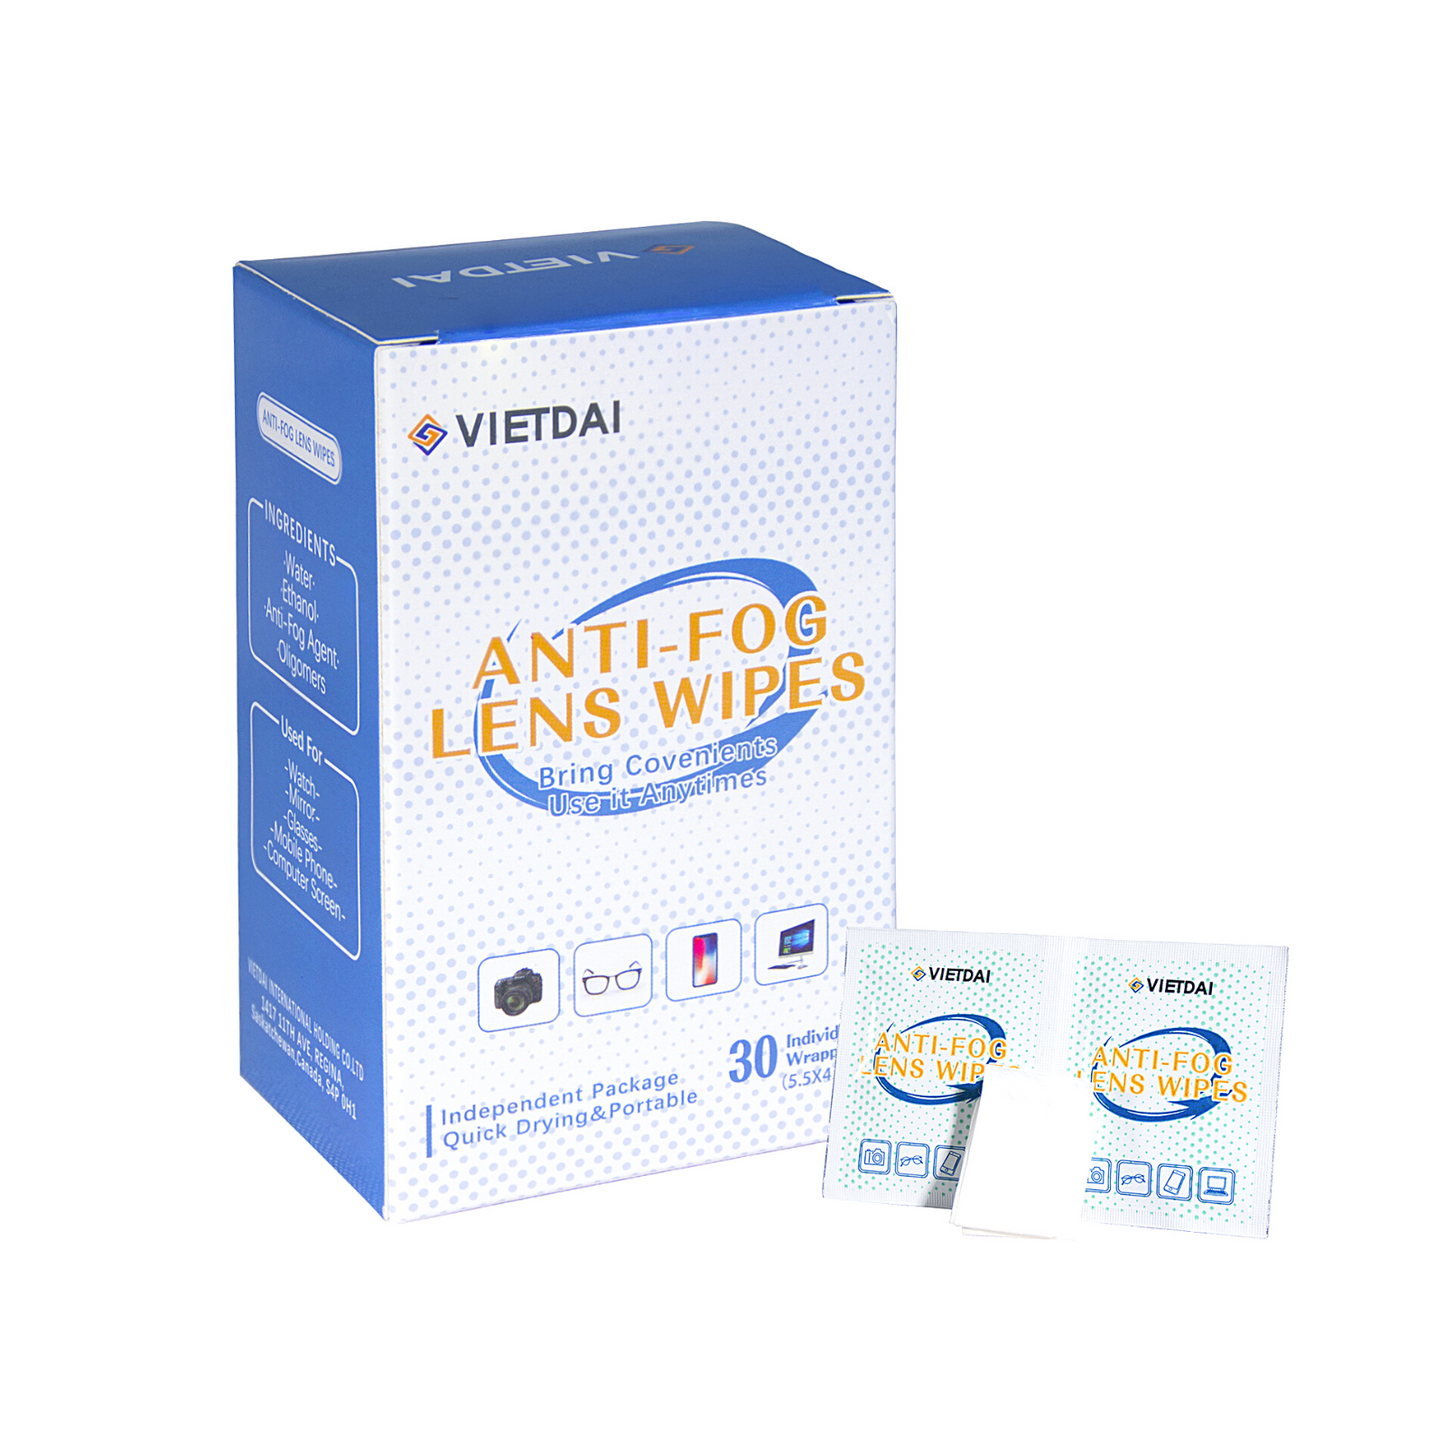 VIETDAI Anti-Fog Lens Wipes